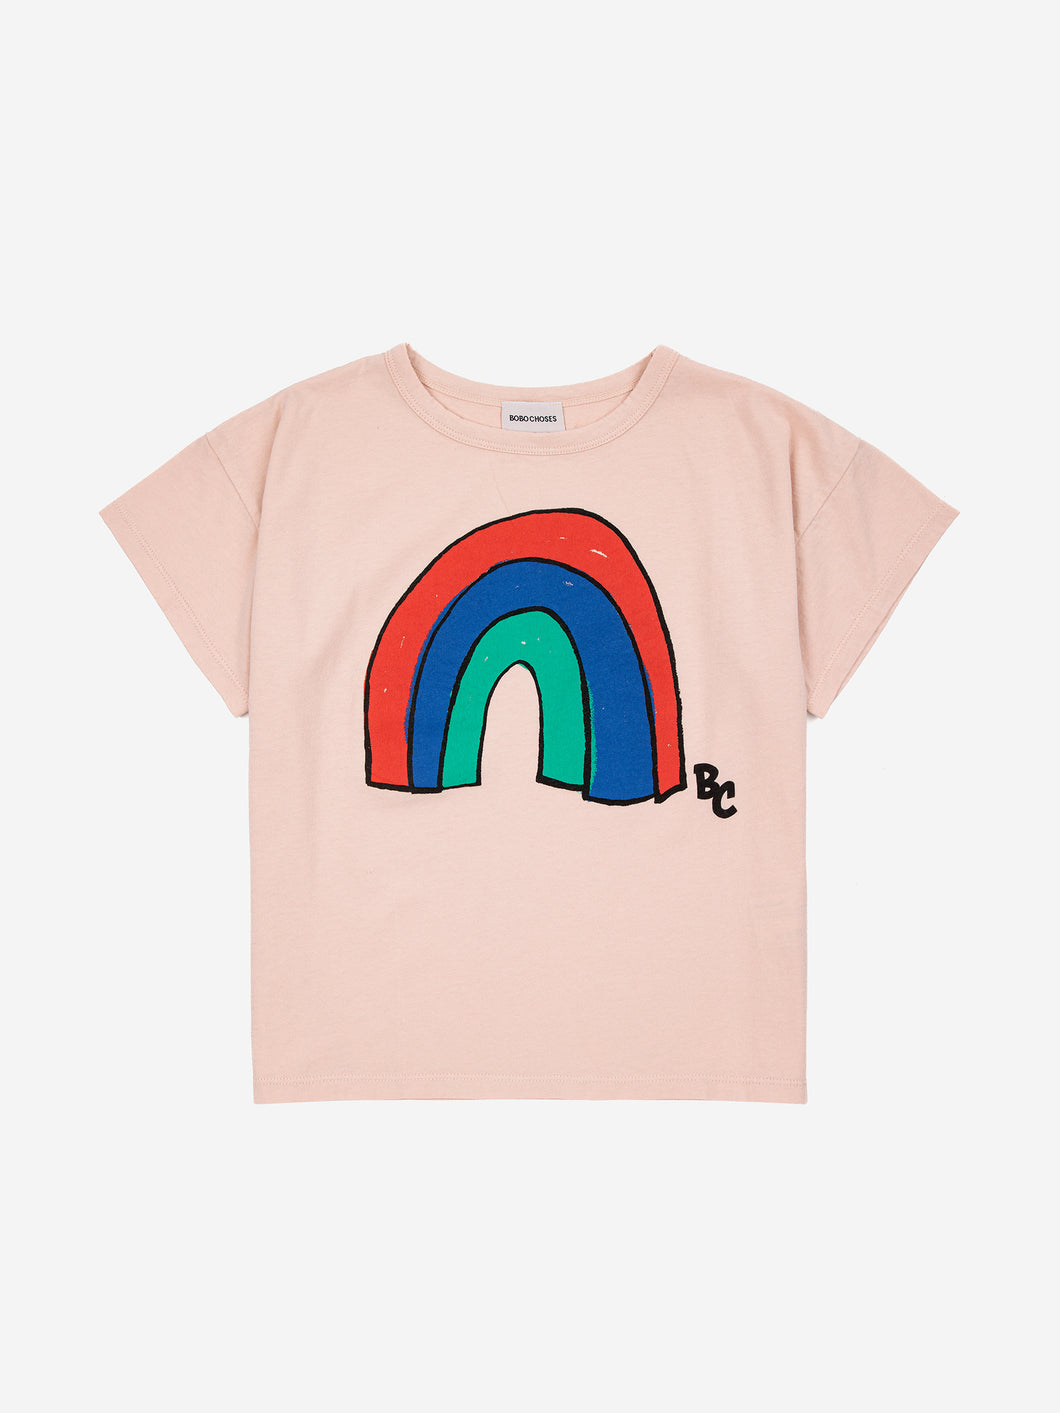 Bobo Choses / KID / T-Shirt / Rainbow